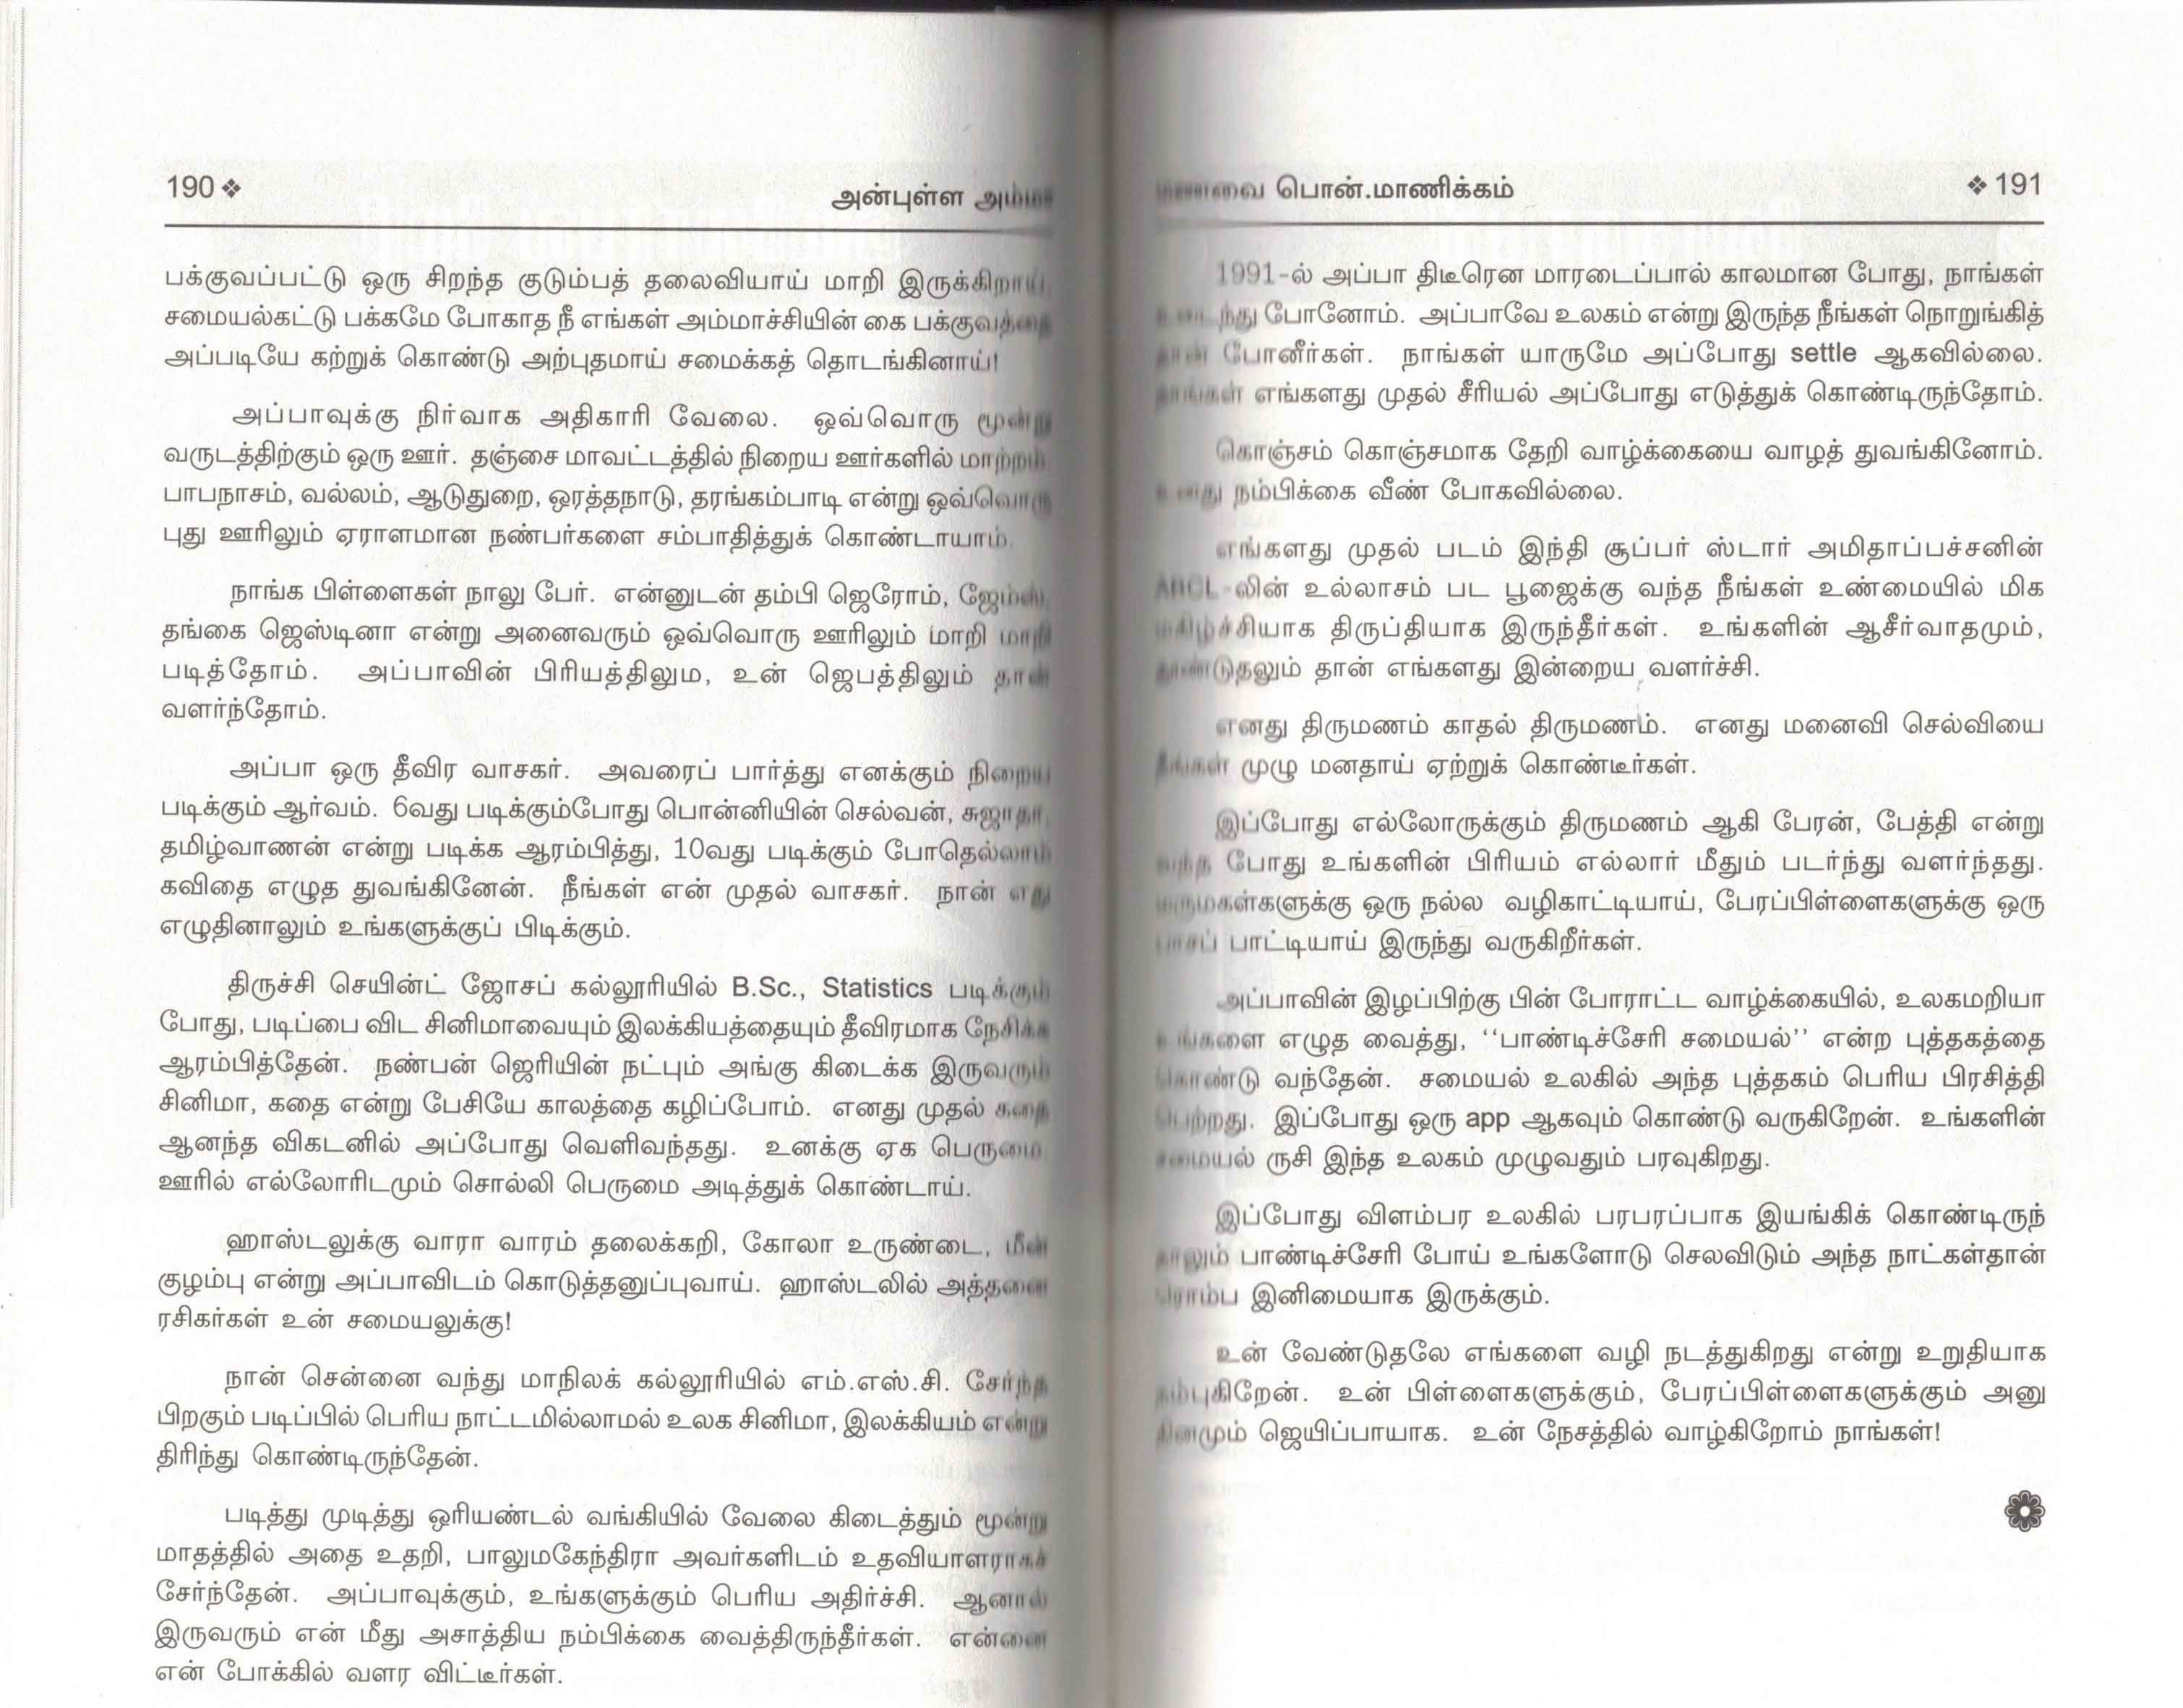 Article Writing Services Company Chennai